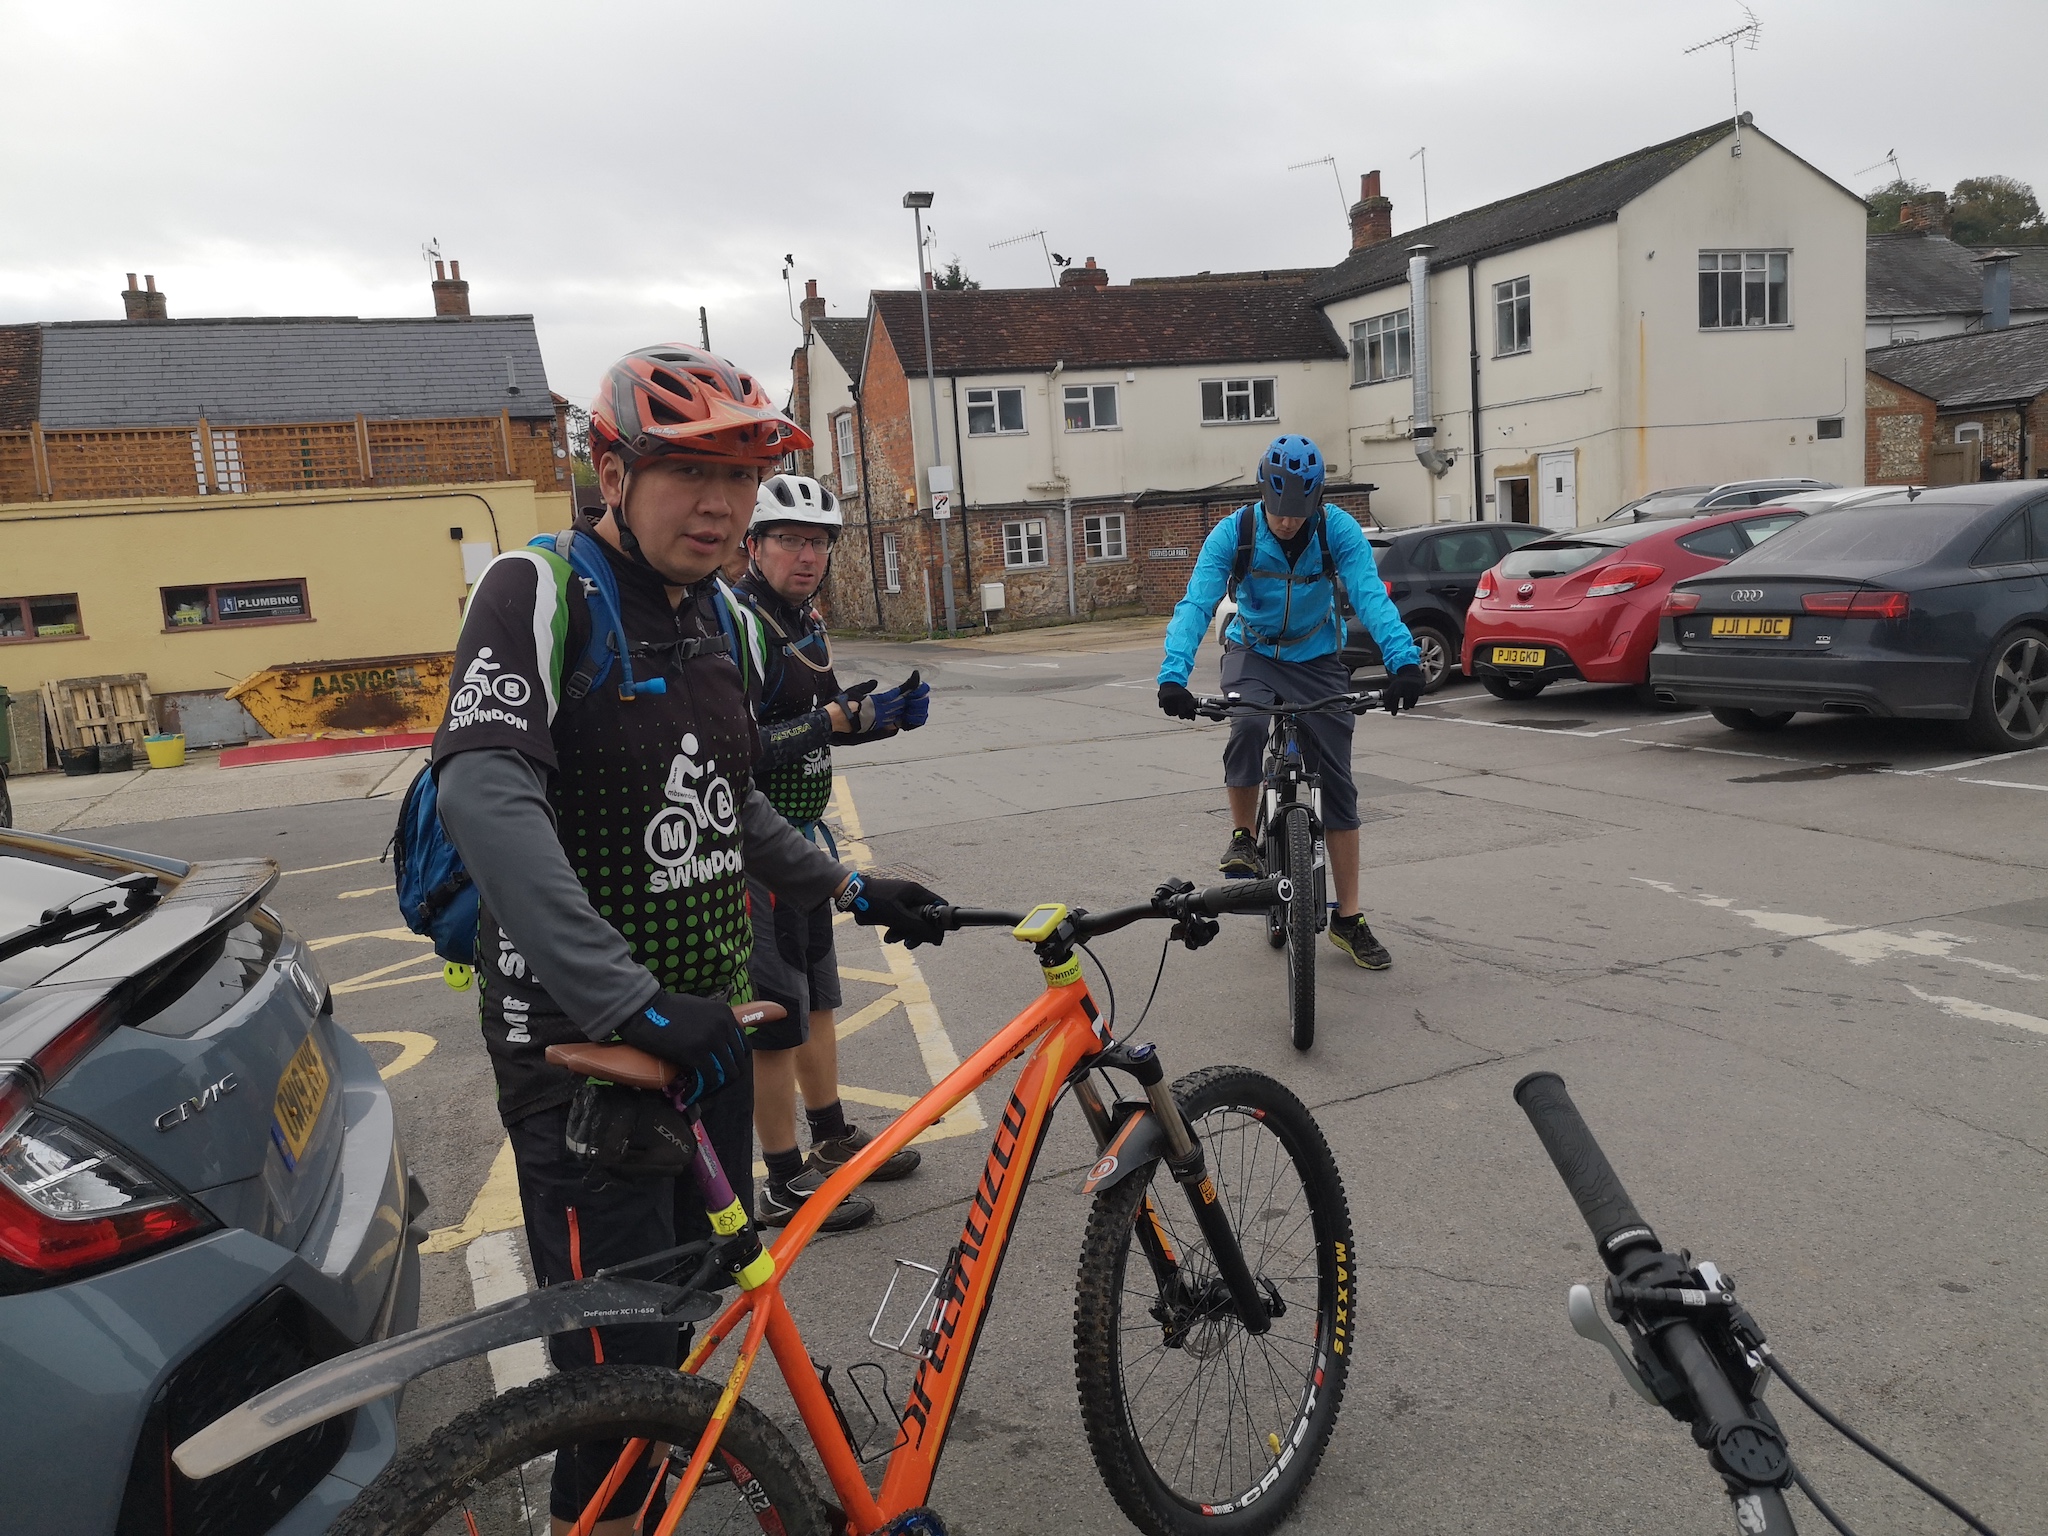 Ride Report – Return to Lambourn